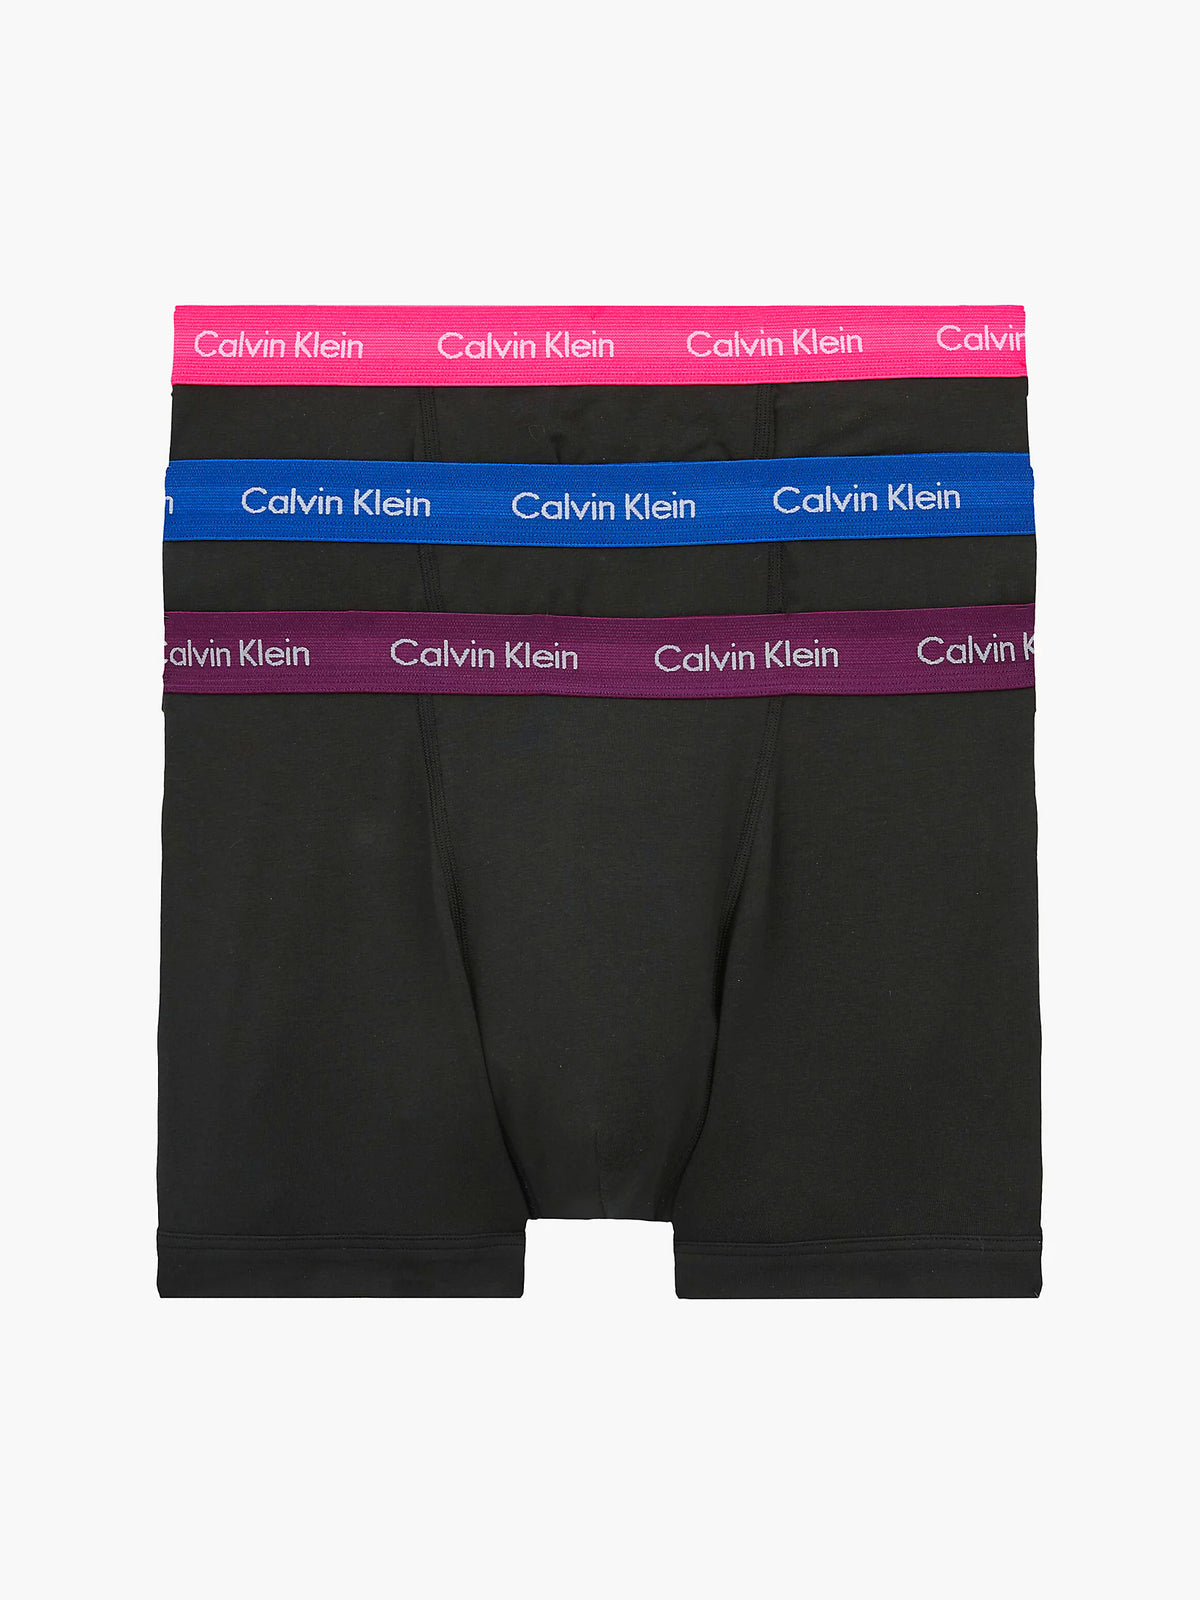 Calvin Klein Mens Classic Stretch Boxer Shorts/ Trunks (3-Pack), 07, U2662G-Ss22, B-Groovy Plum/ Bright Rose/ Blue Logo